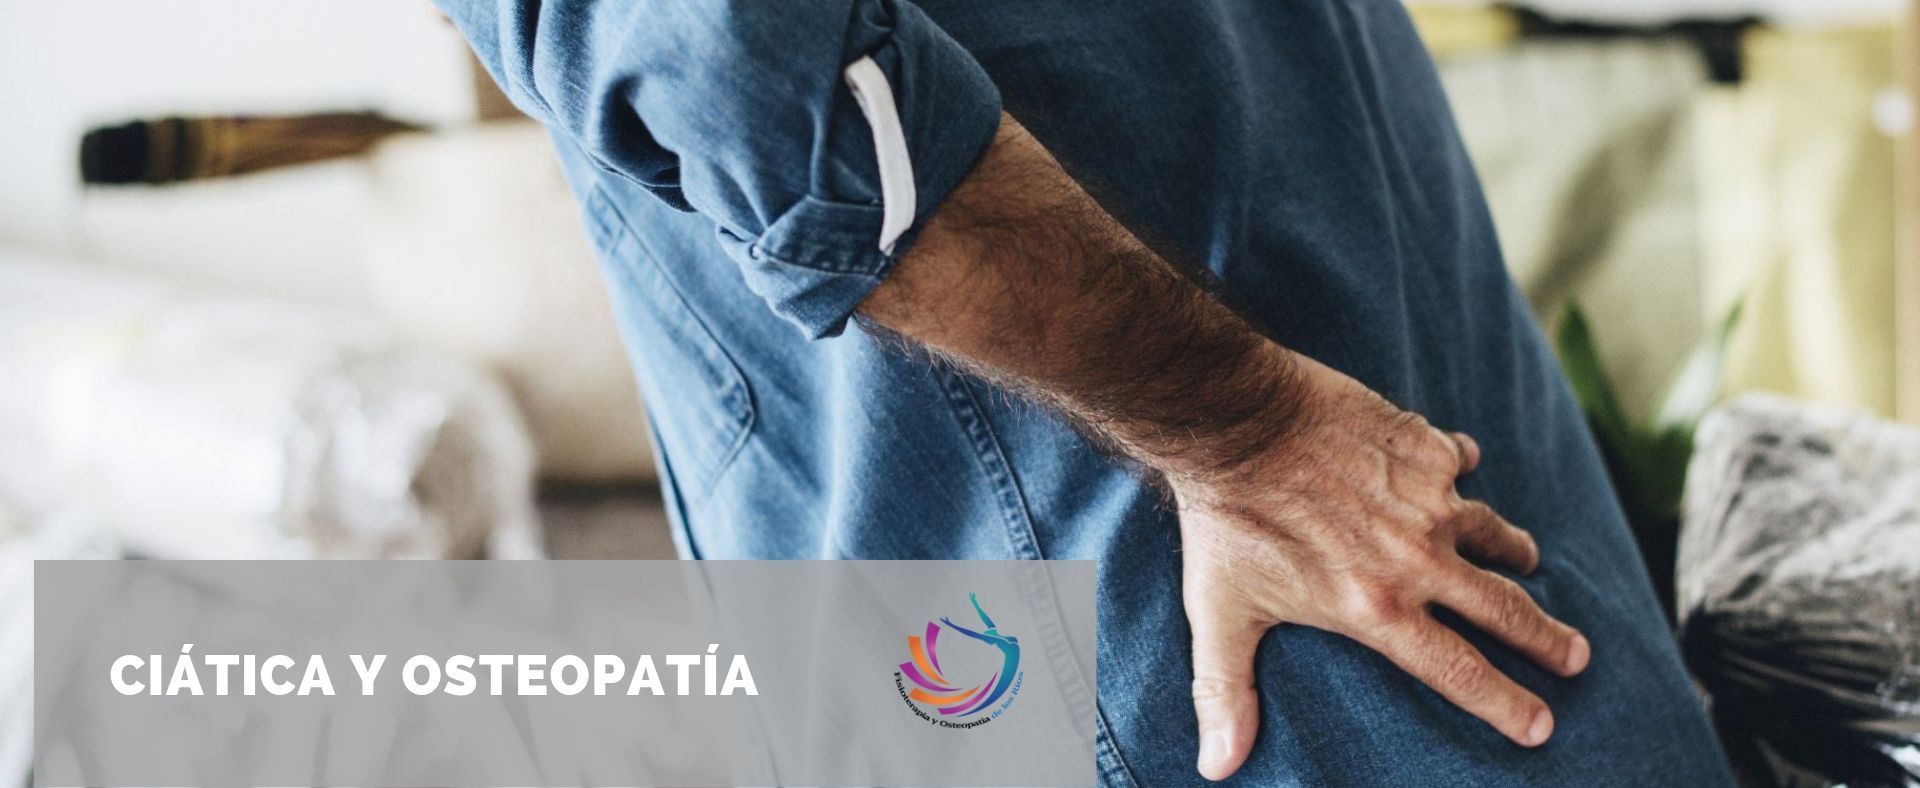 ciatica y osteopatia